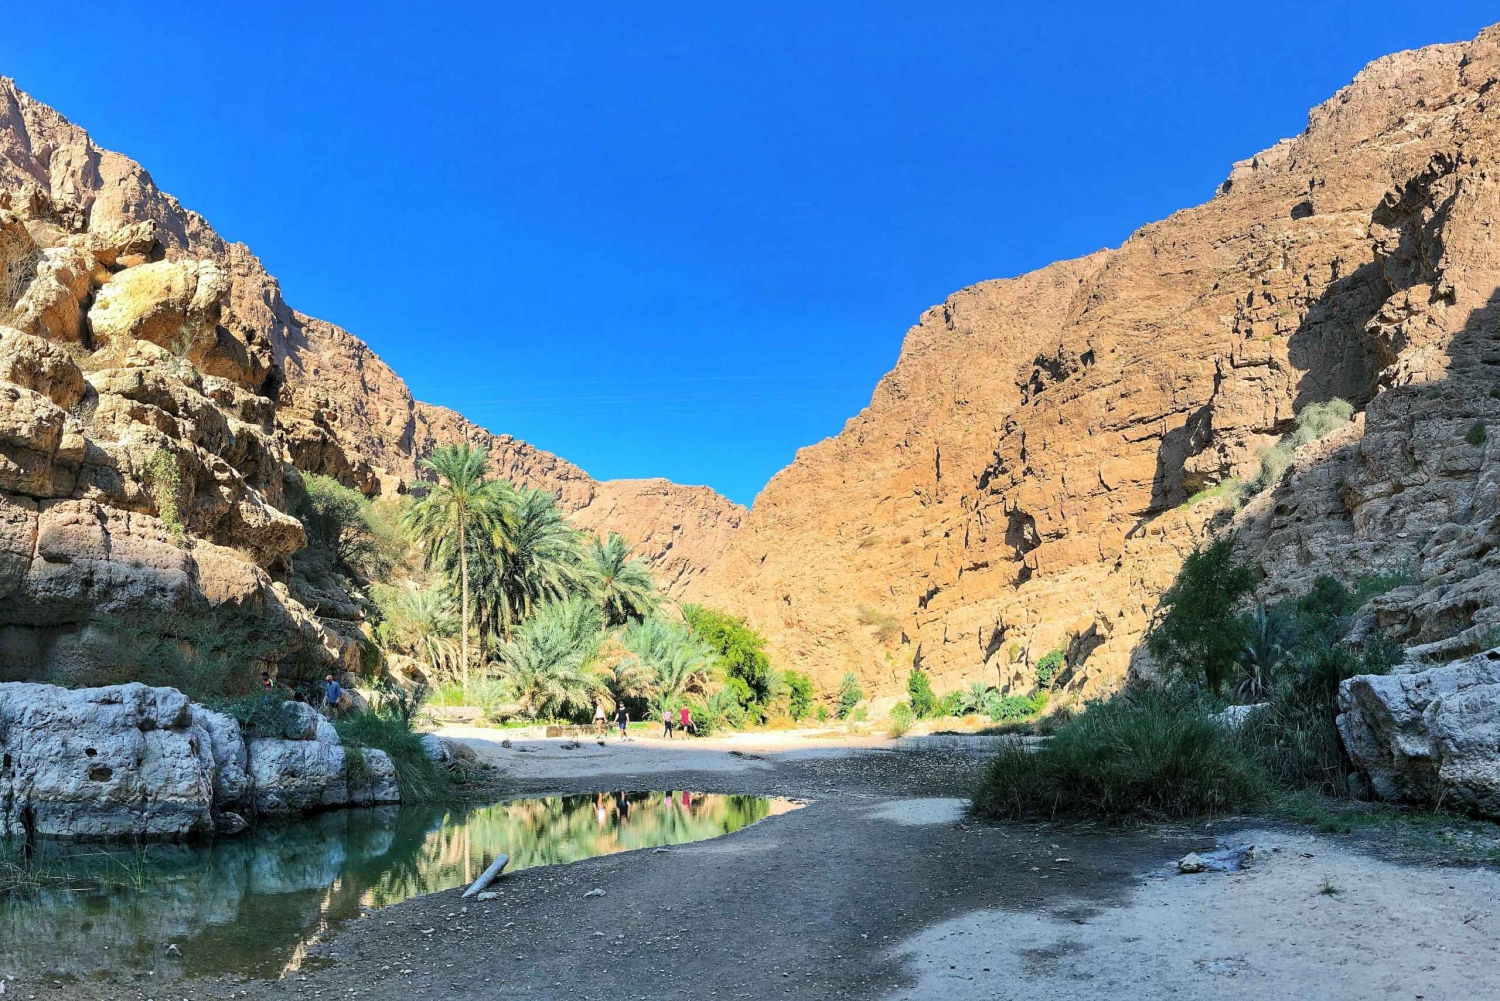 Muscat: Wadi Shab and Bimmah Sinkhole Private Full-Day Tour